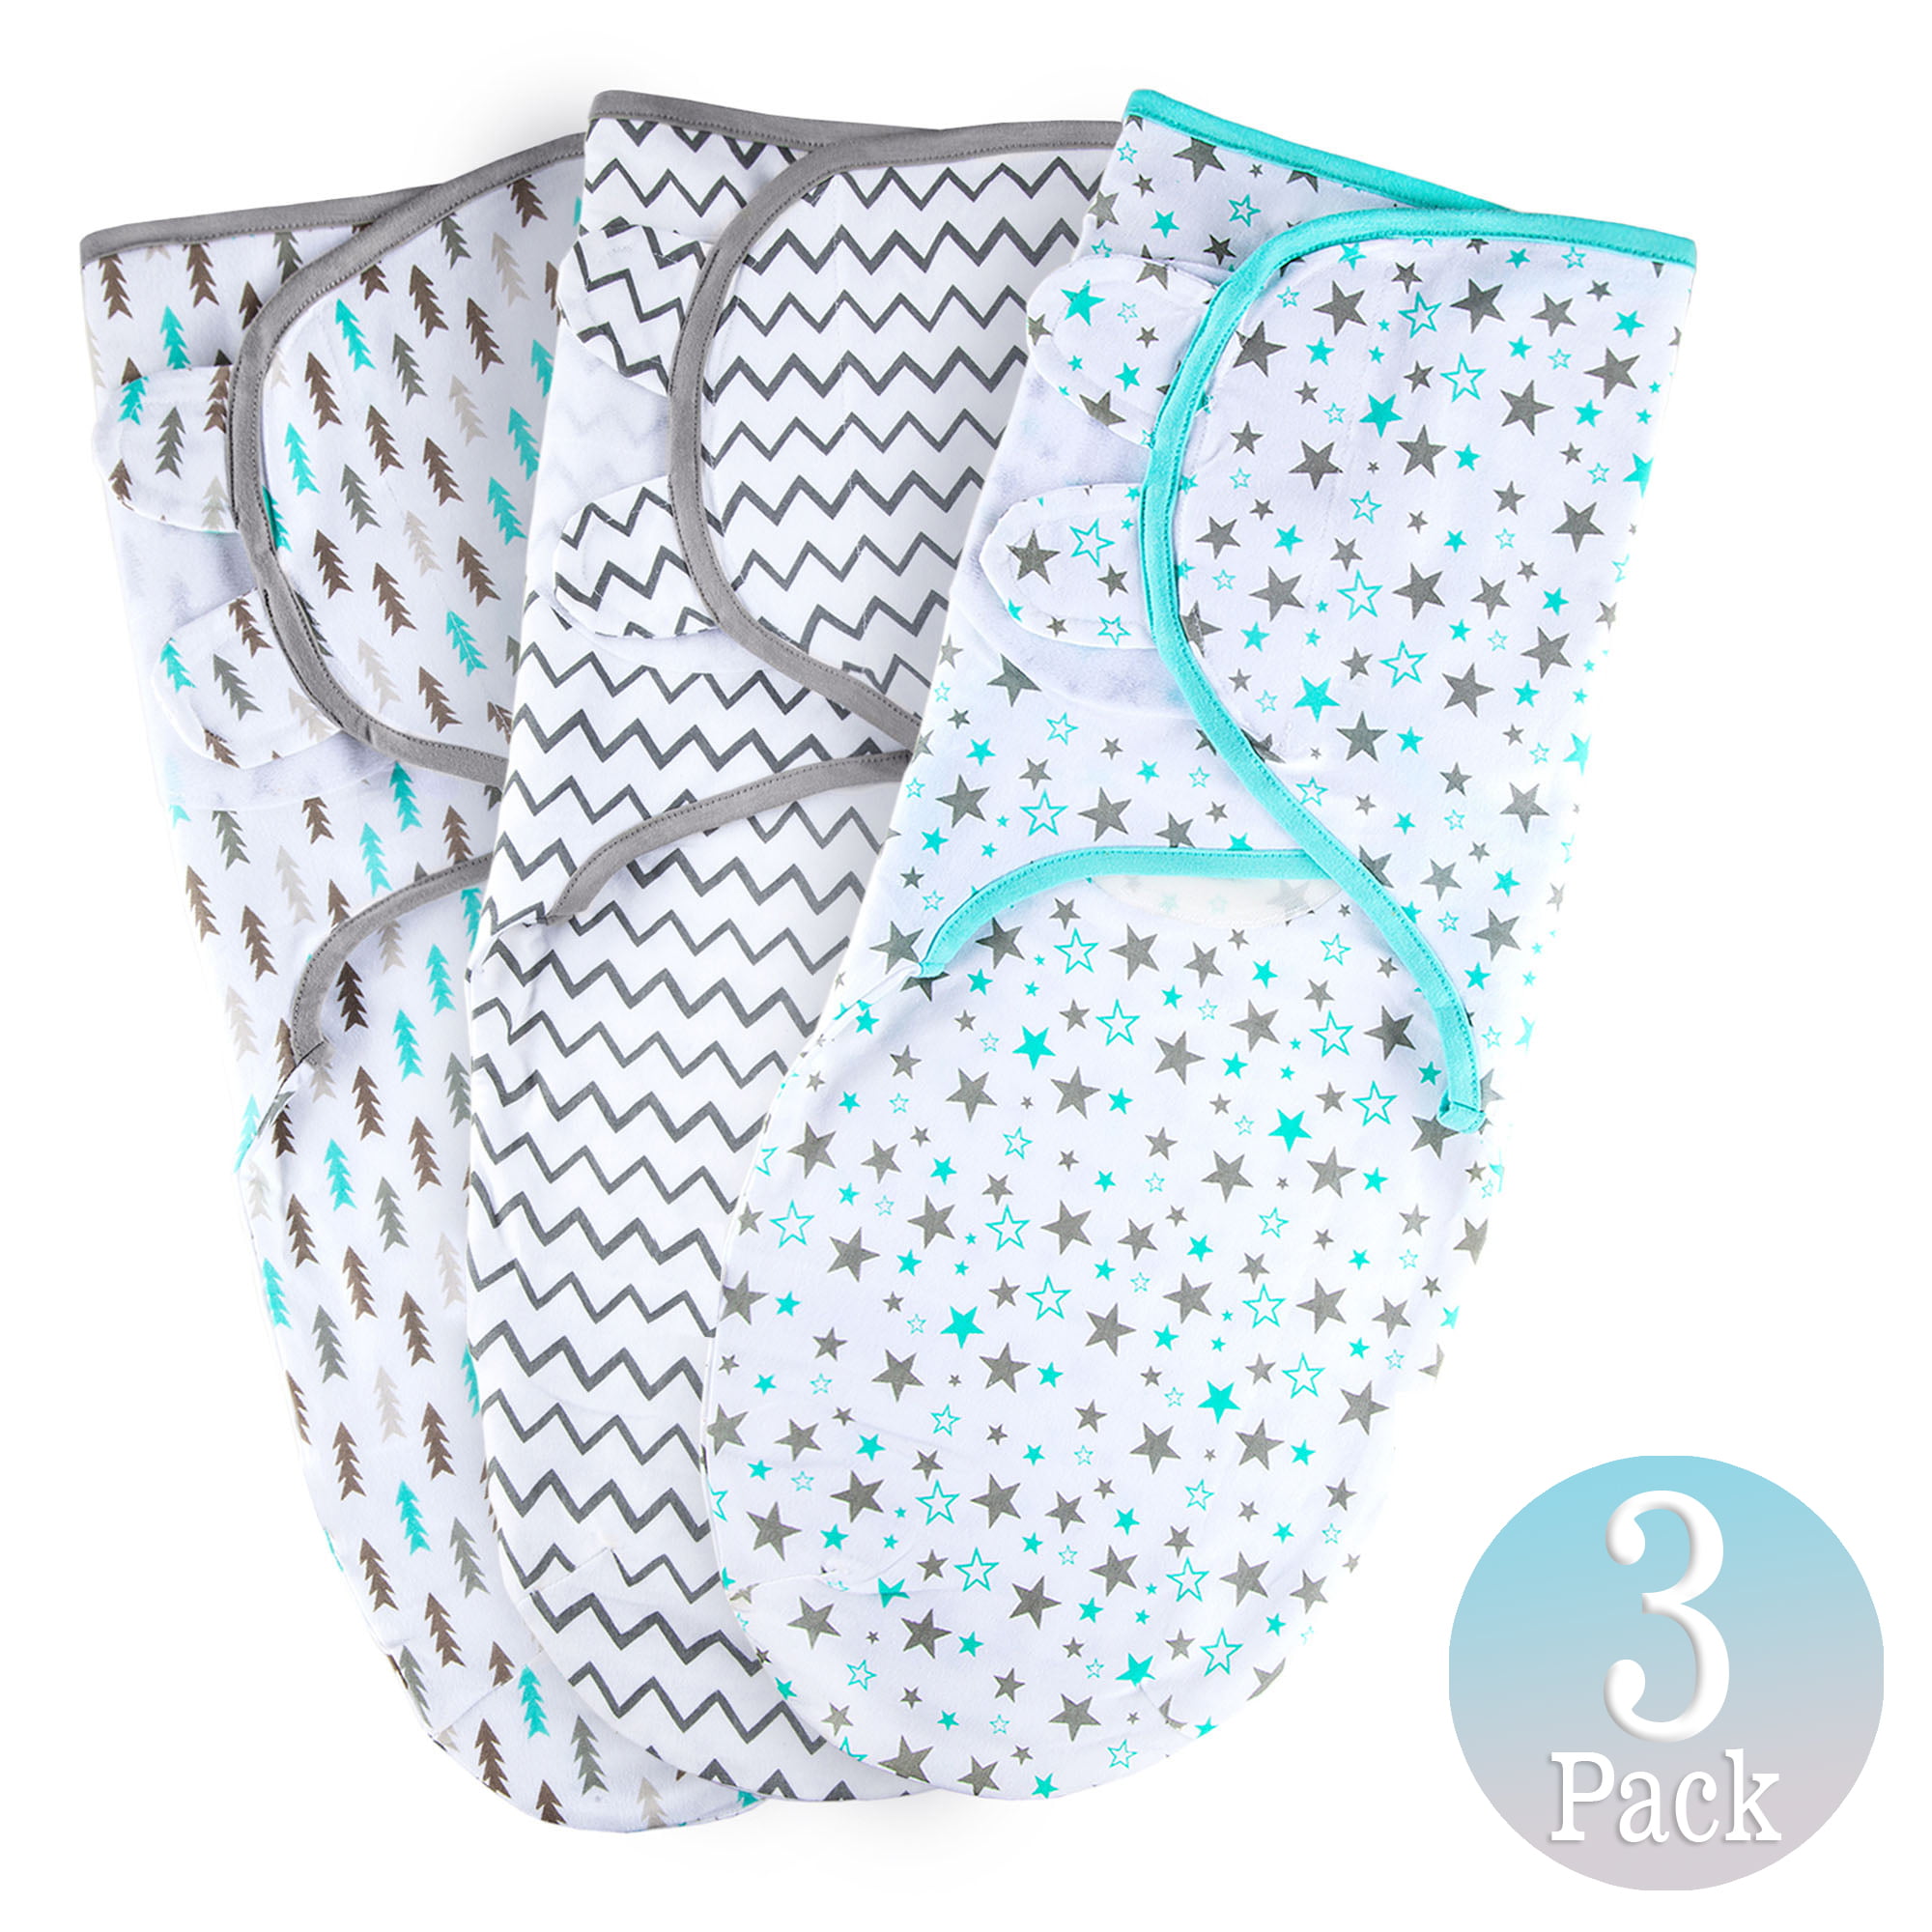 Preemie Swaddle Blankets (Preemie Size) - Walmart.com ...